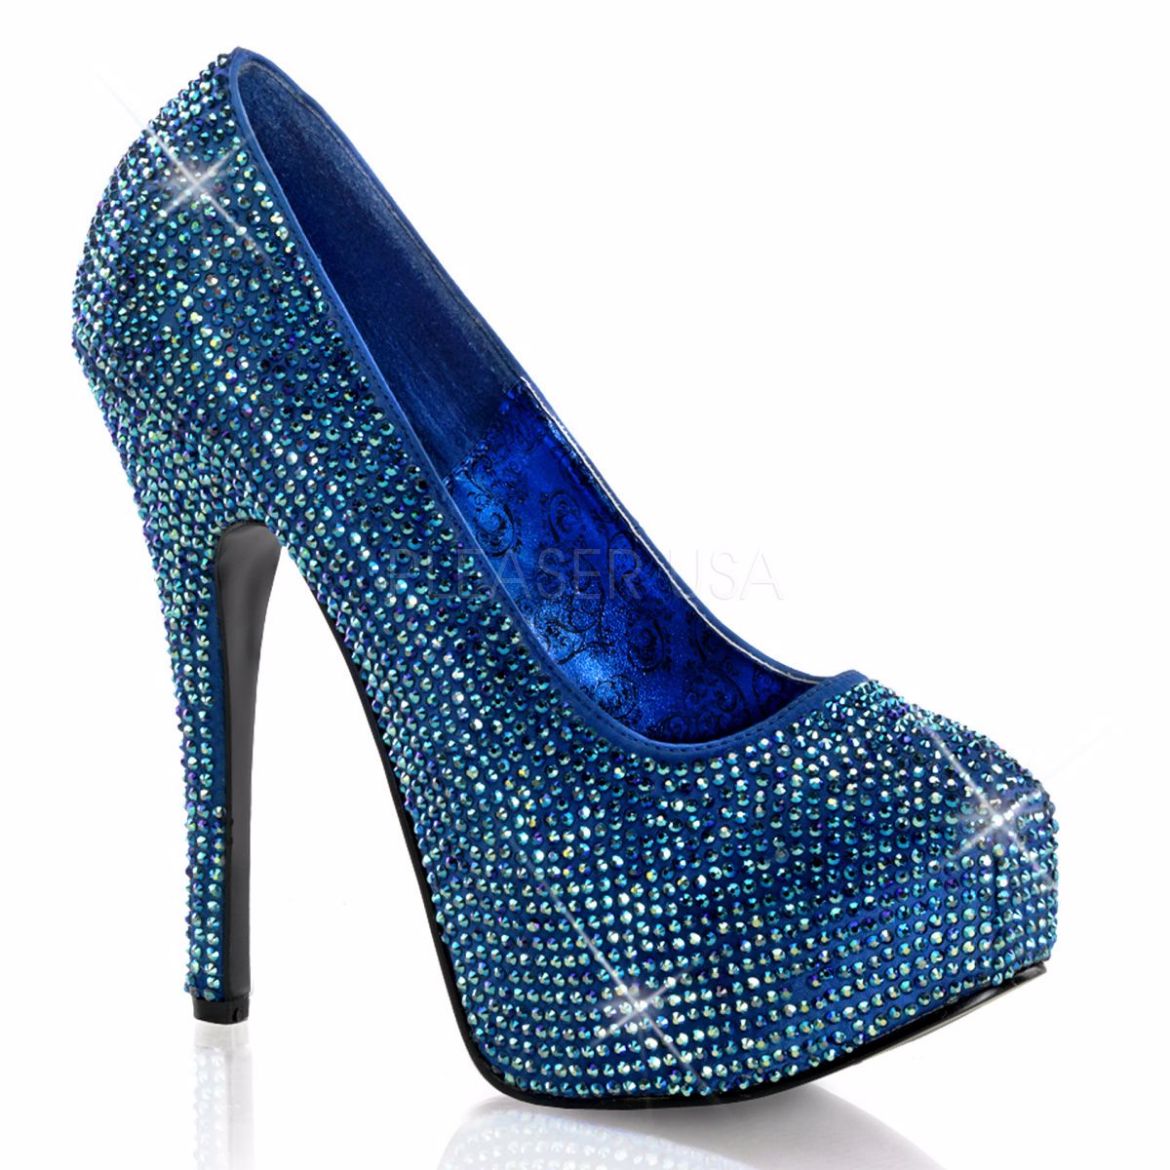 Product image of Fabulicious Teeze-06R Blue Satin-Irid Rhinestone, 5 3/4 inch (14.6 cm) Heel, 1 3/4 inch (4.4 cm) Hidden Platform Court Pump Shoes